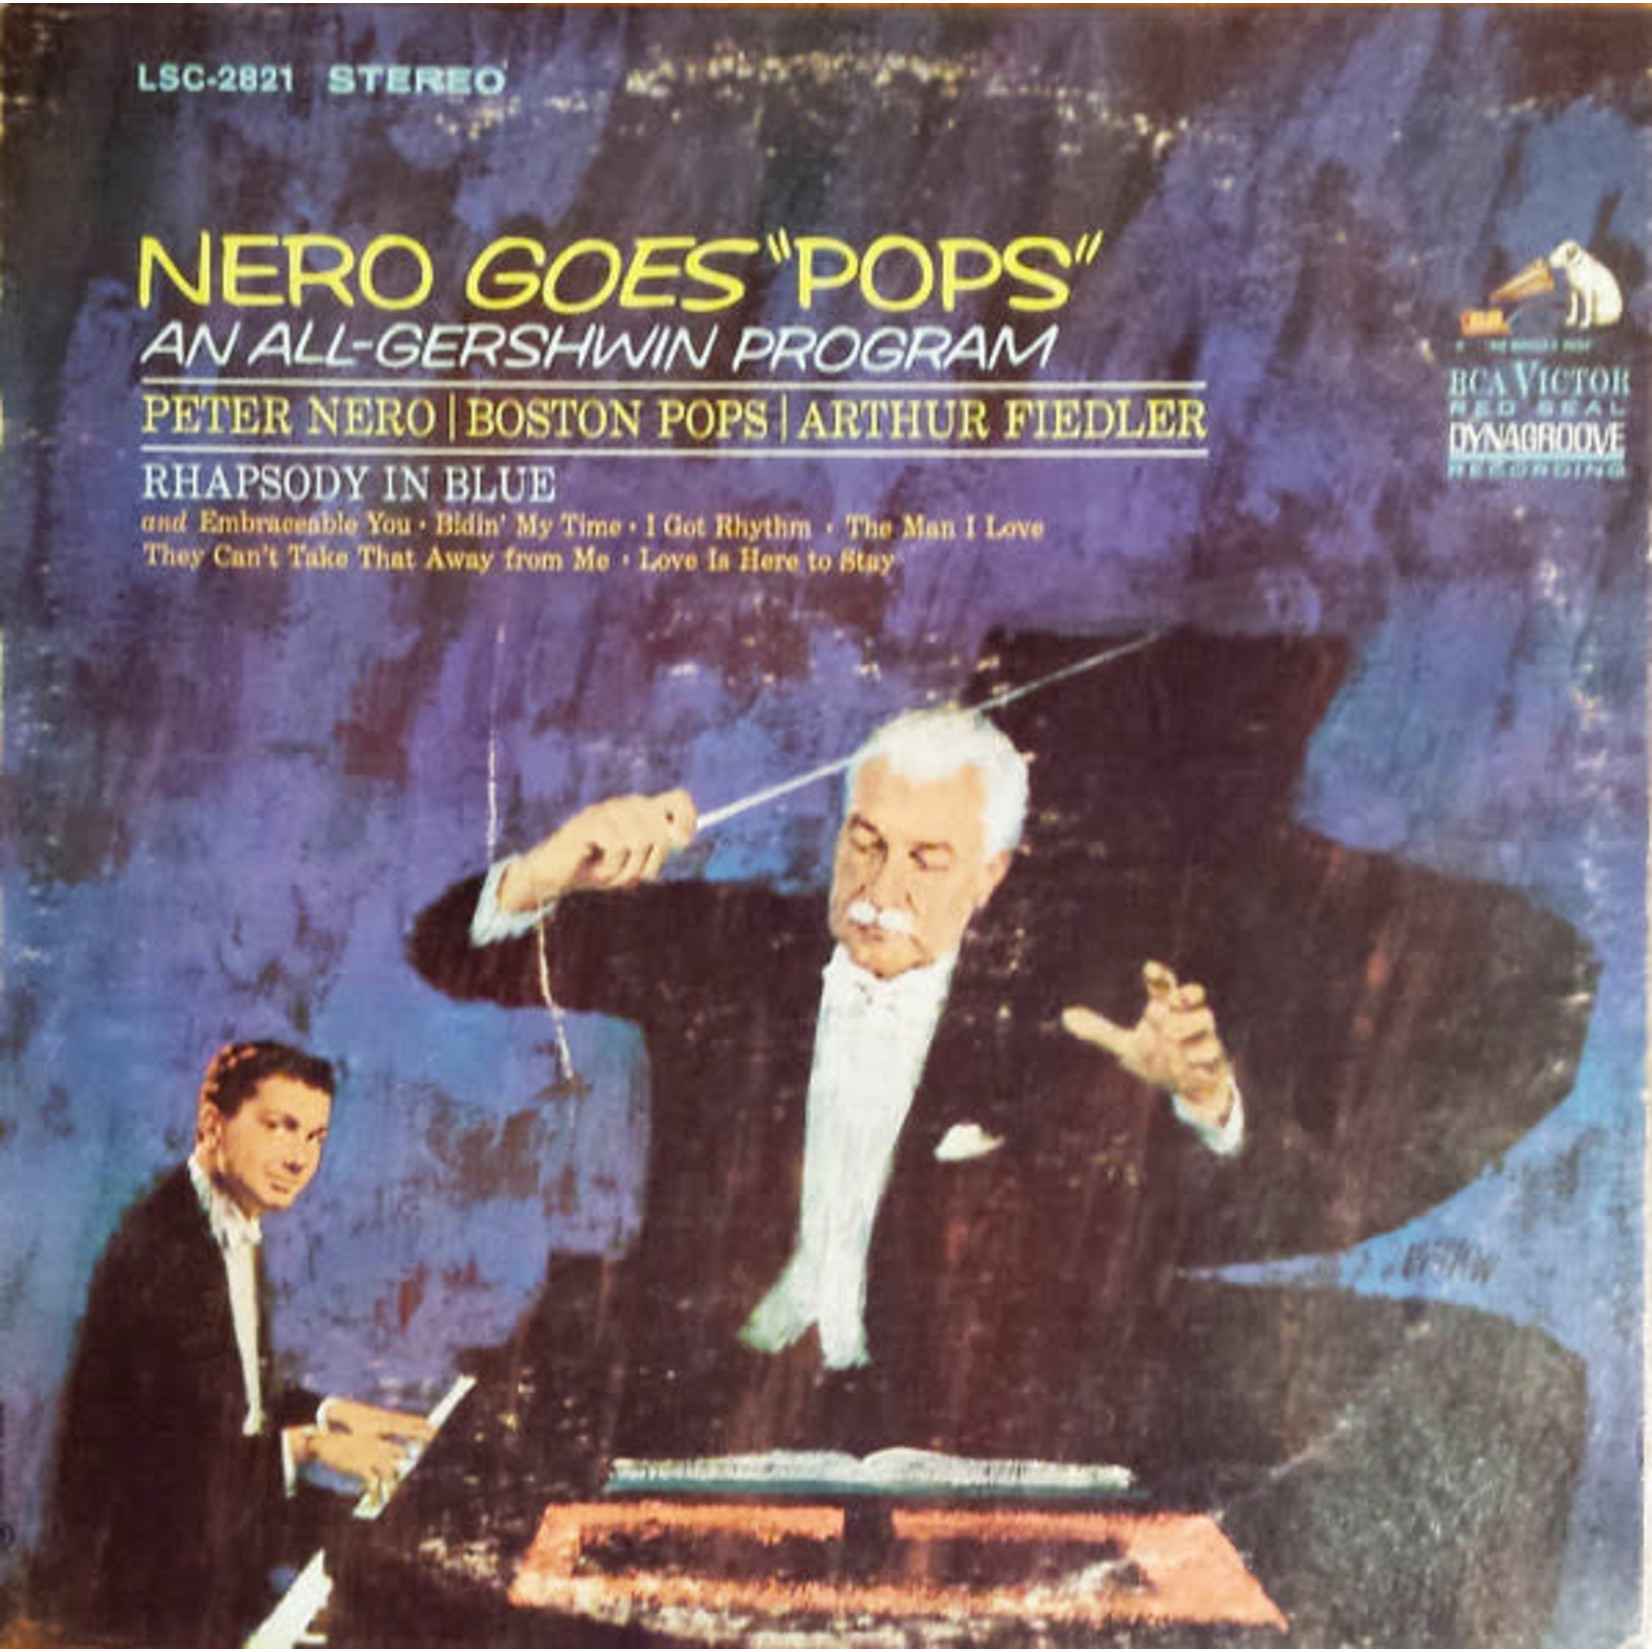 Peter Nero Peter Nero | Boston Pops | Arthur Fiedler – Nero Goes "Pops" An All Gershwin Program (VG, 1963, LP, RCA Victor Red Seal – LSC-2821, Canada)